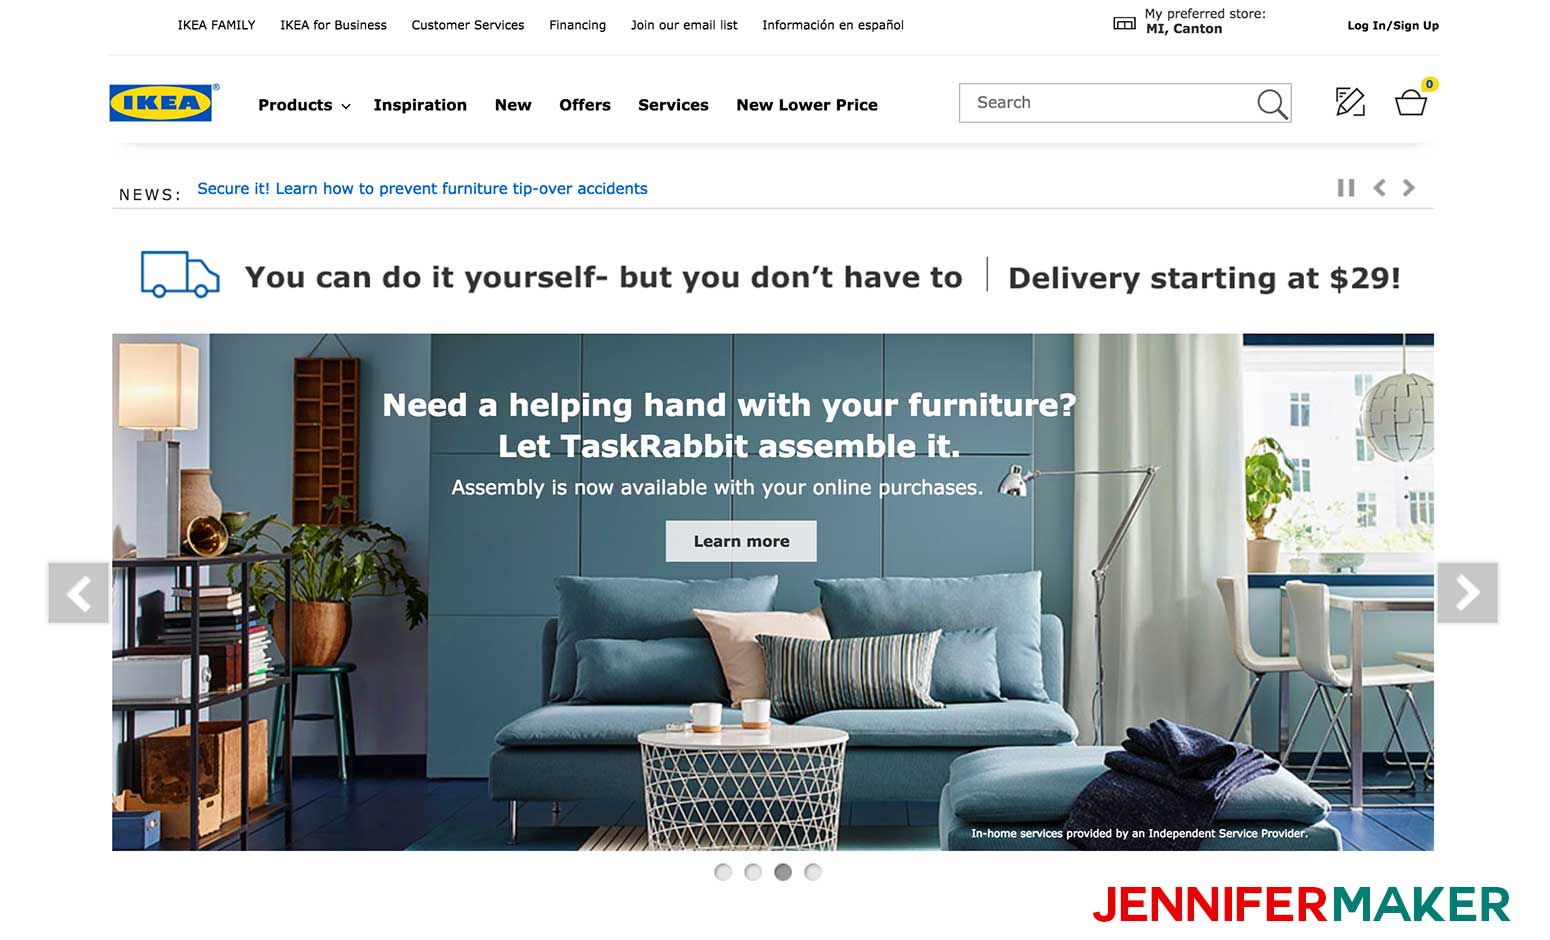 IKEA Shopping Tips for a Faster, Cheaper Trip - Jennifer Maker